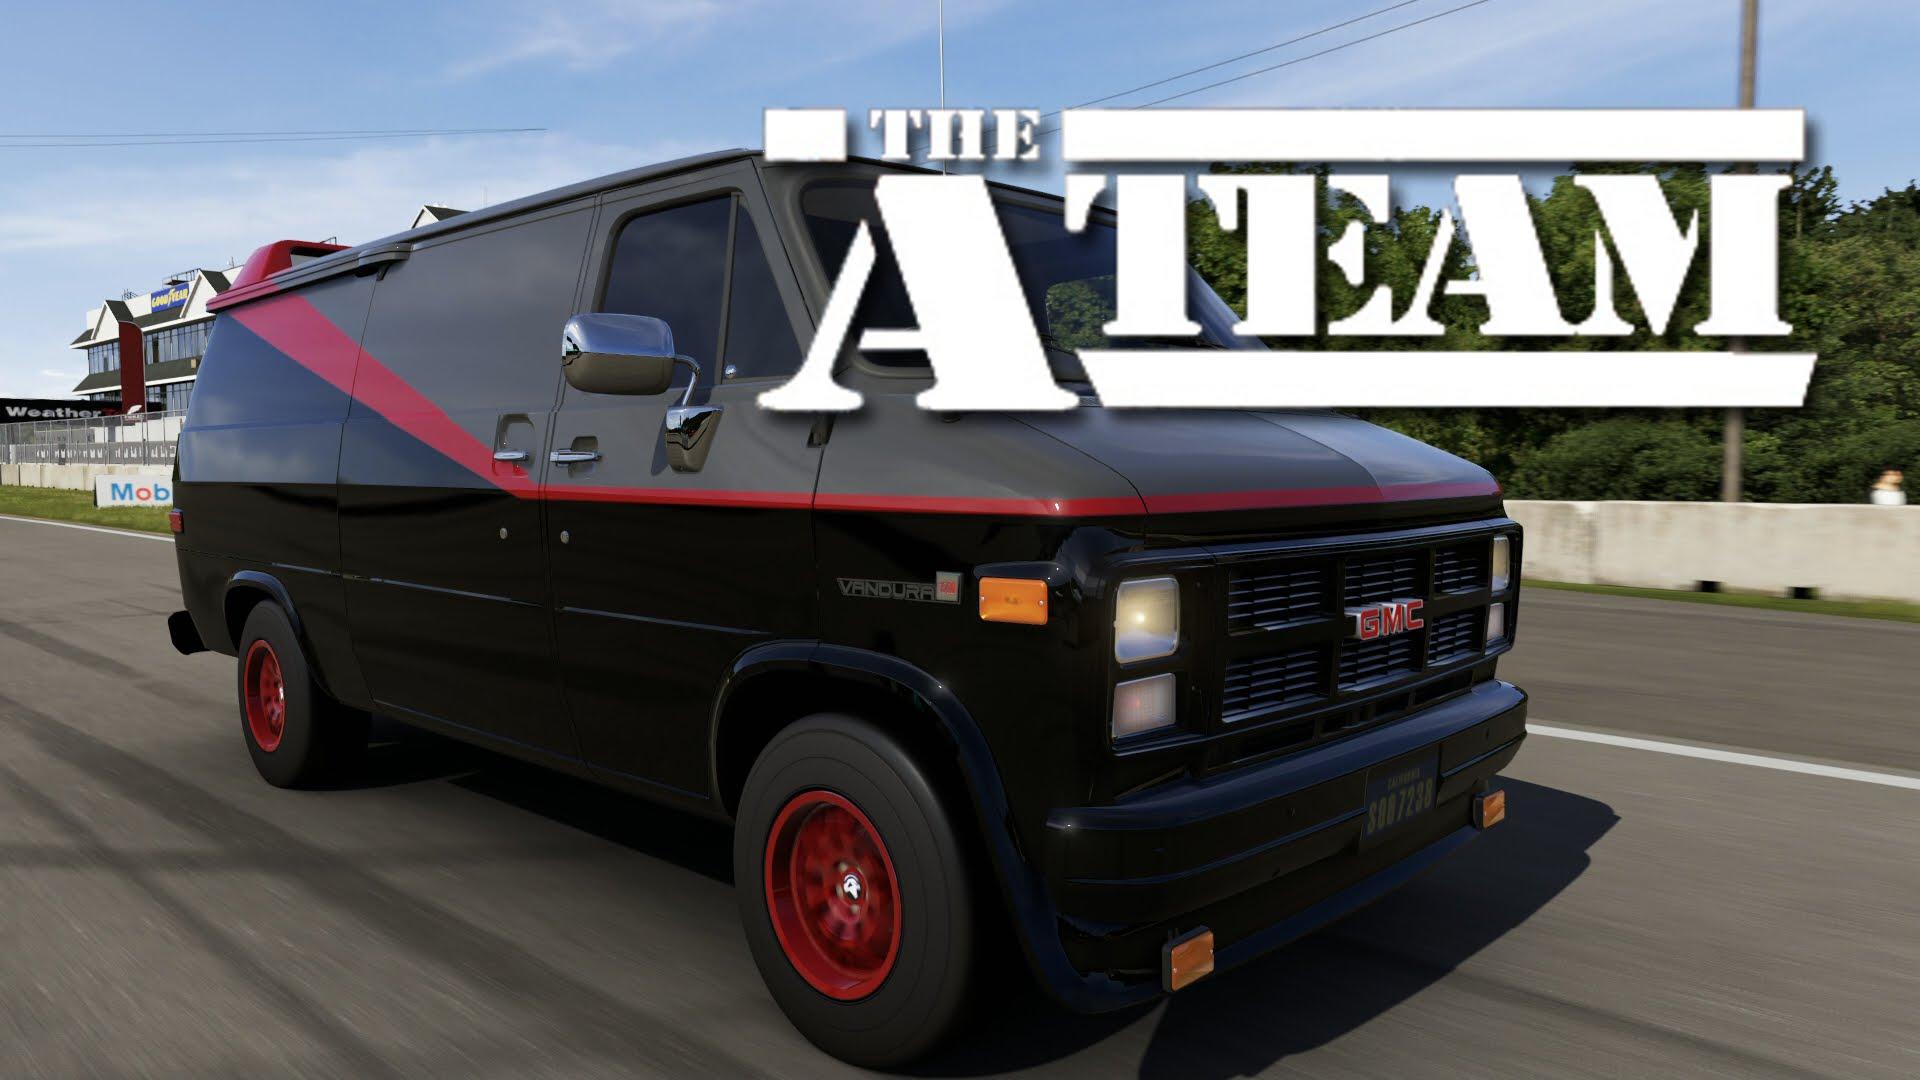 A Team Van. Forza 6 Movie Cars: The A Team (TV Show)